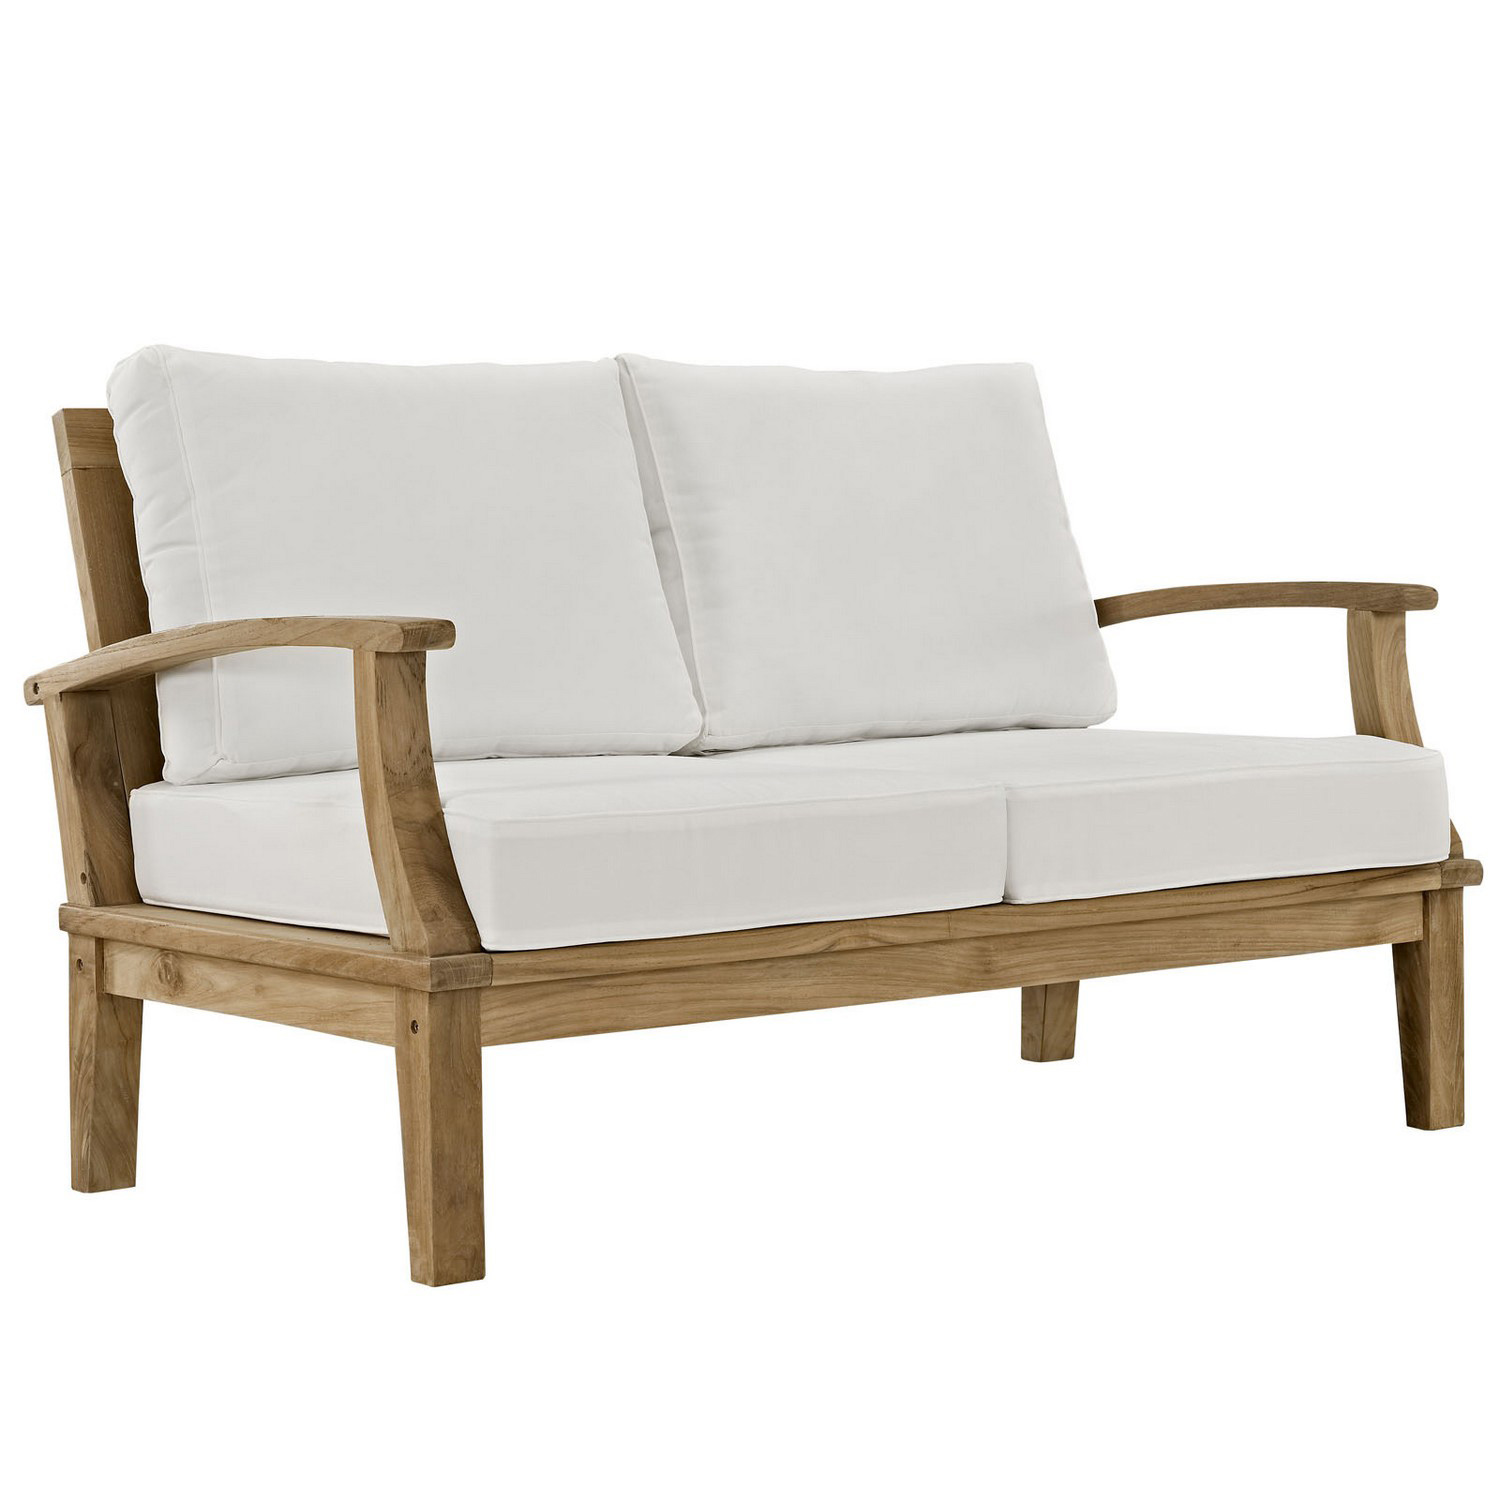 Modway Marina 4 Piece Outdoor Patio Teak Sofa Set - Natural White